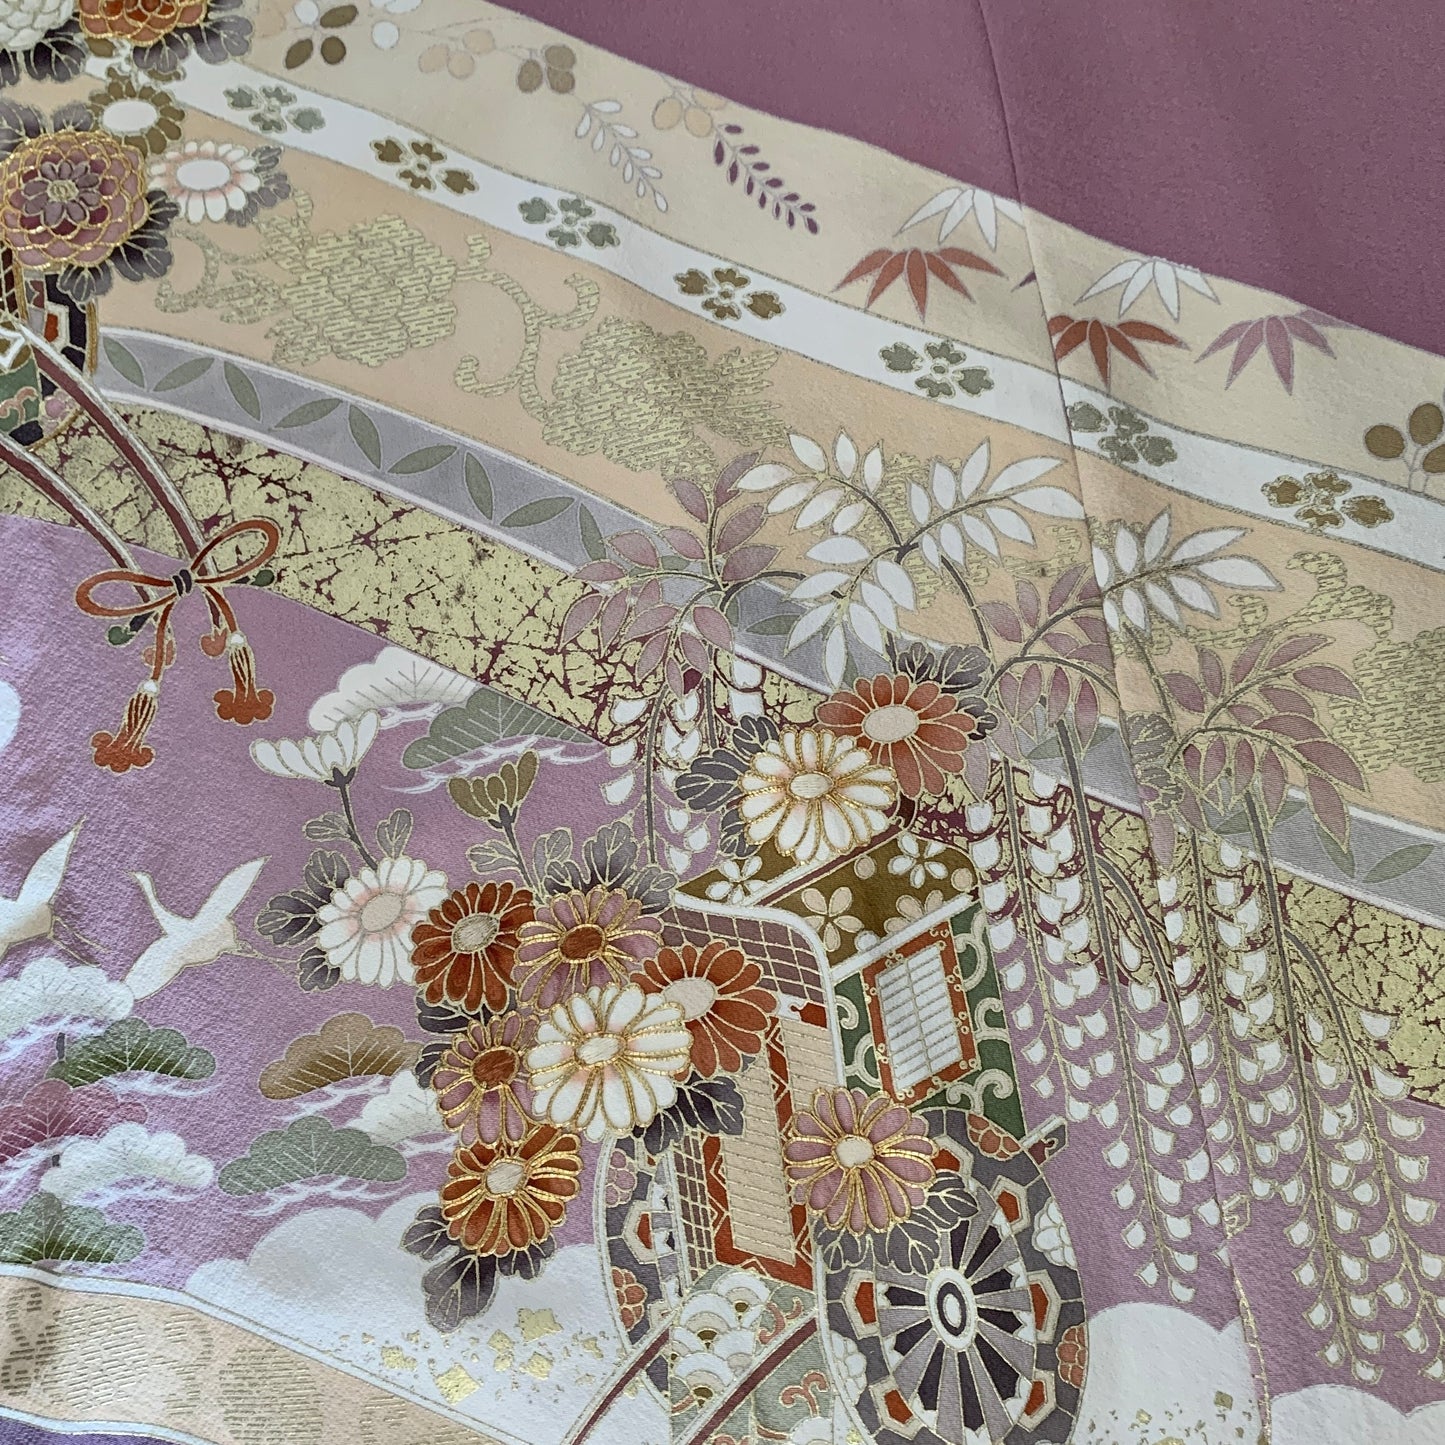 Silk Kimono dress, Houmongi 訪問着, Handcrafted, Upcycled, Chrysanthemum 菊, #pre12